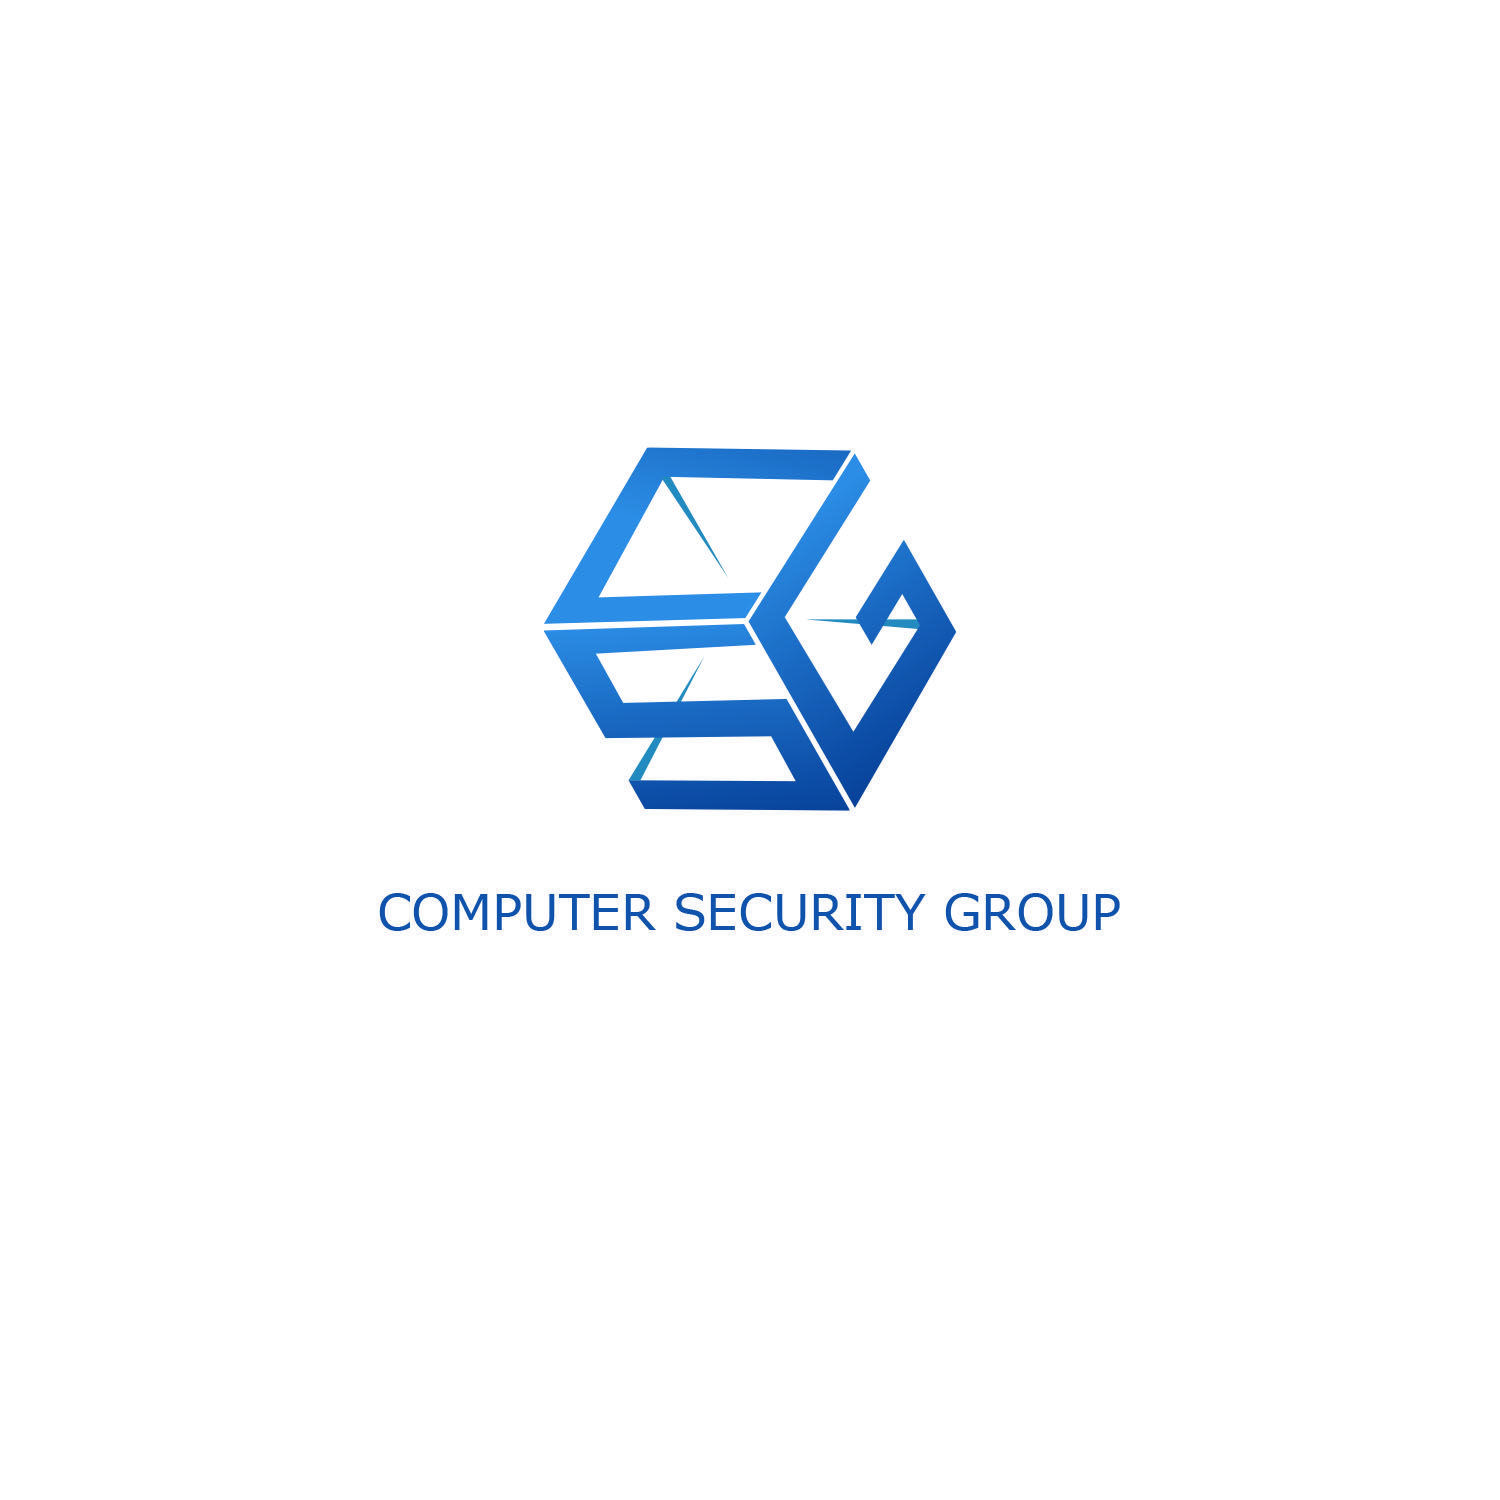 Computer Security Logo - Professional, Serious, Computer Security Logo Design for Computer